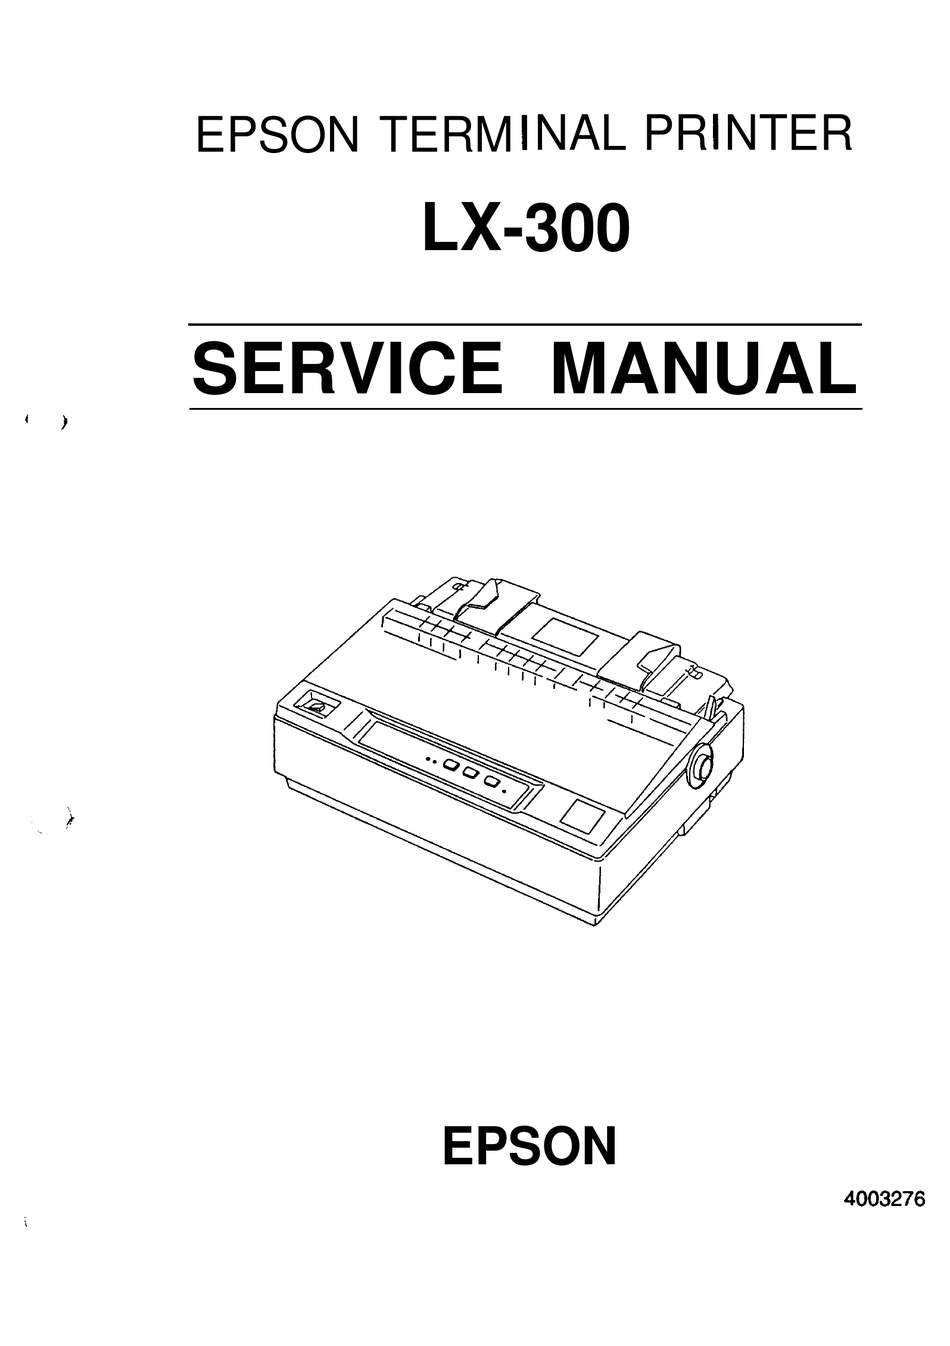 epson lx 300 driver windows 7 64 bit download